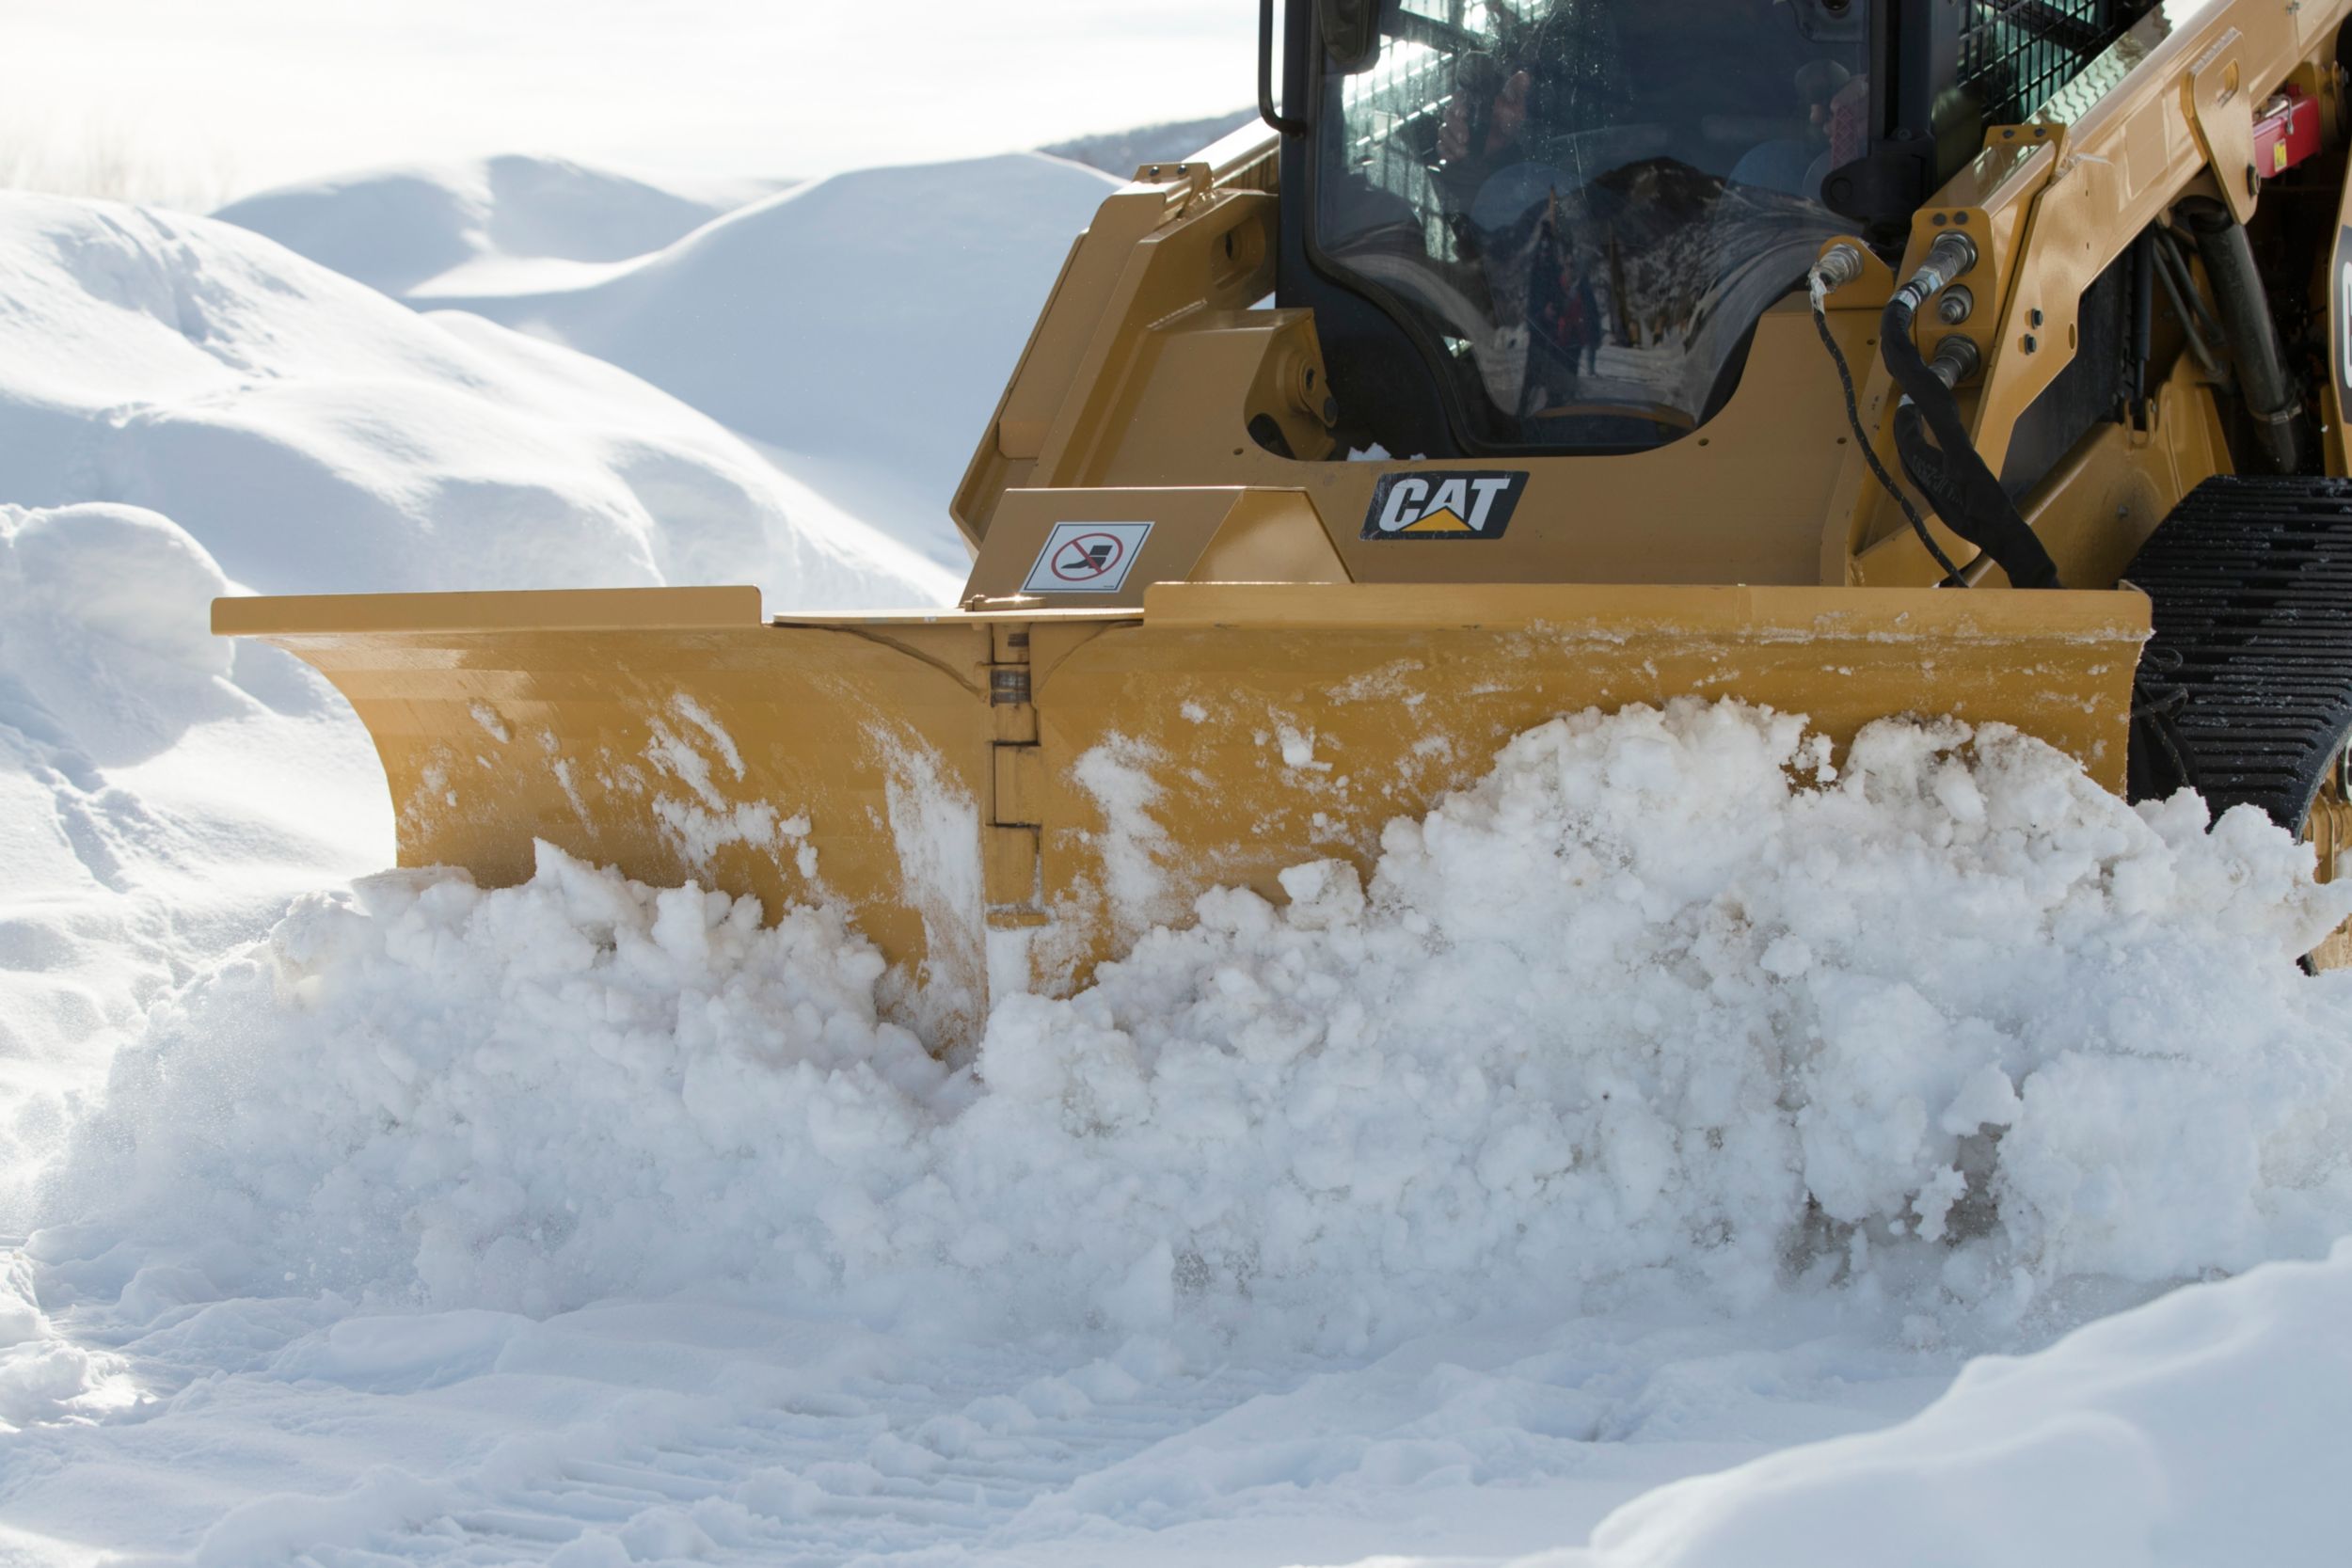 Cat V-Plow Cutting Through Snow